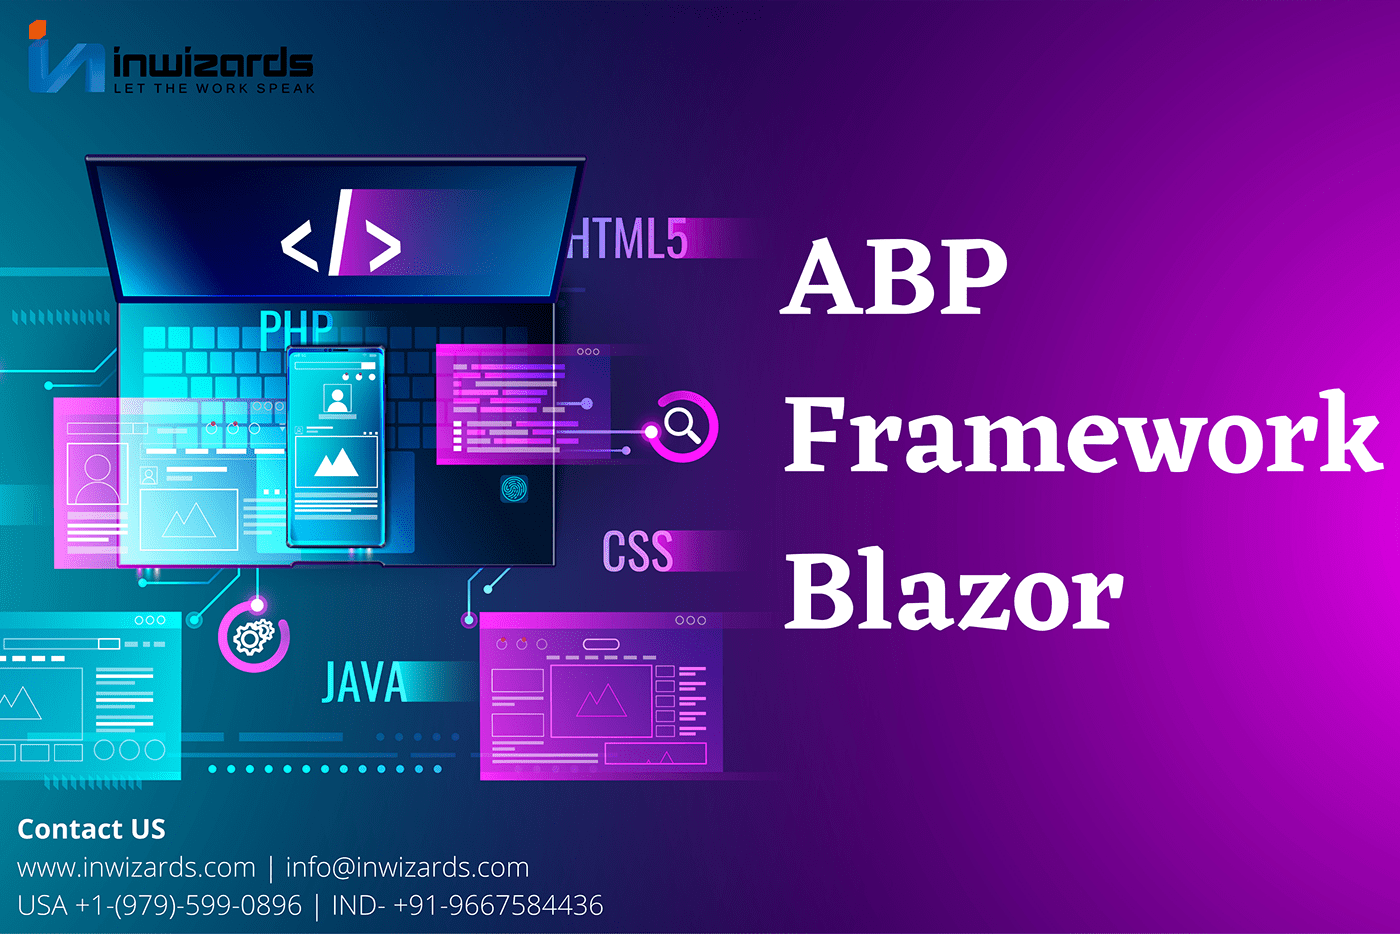 ABP Framework Blazor